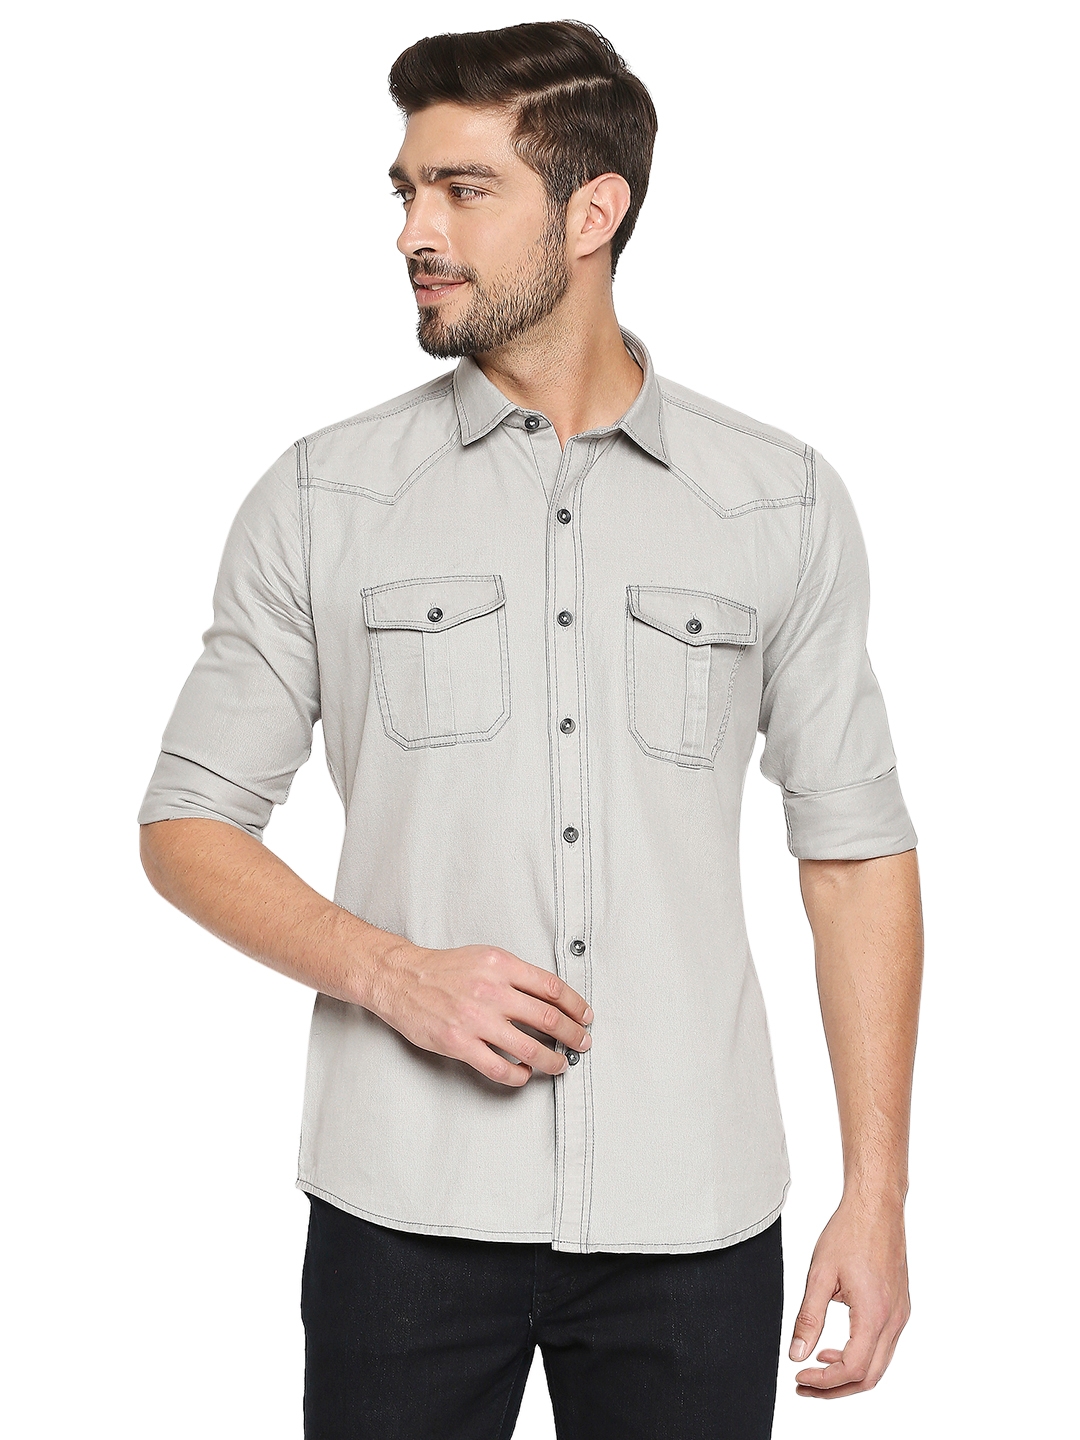 EVOQ | EVOQ Full Sleeves Solid Cotton Grey Casual Shirt